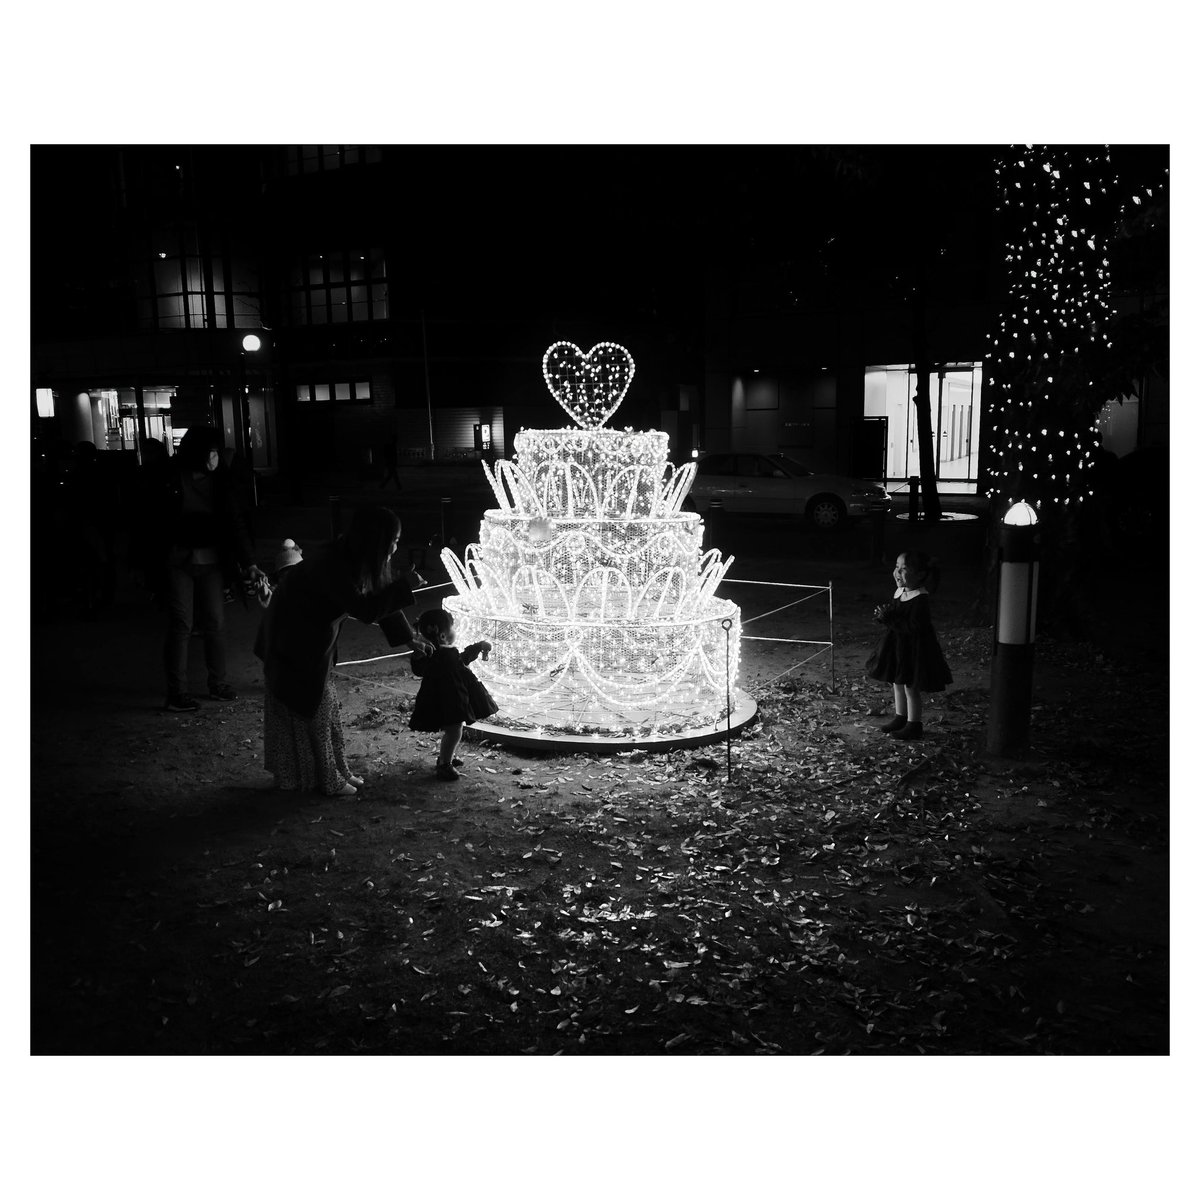 Core Memories

-----------------------

#fujifilm #fujifilmxpro1 #xpro1 #houstonphotographer #texasphptographer #travelphotography #japan #japantrip #japantravel #japanesechristmas #christmaslights #christmas #holidays #people #peoplephotography #blackandwhite